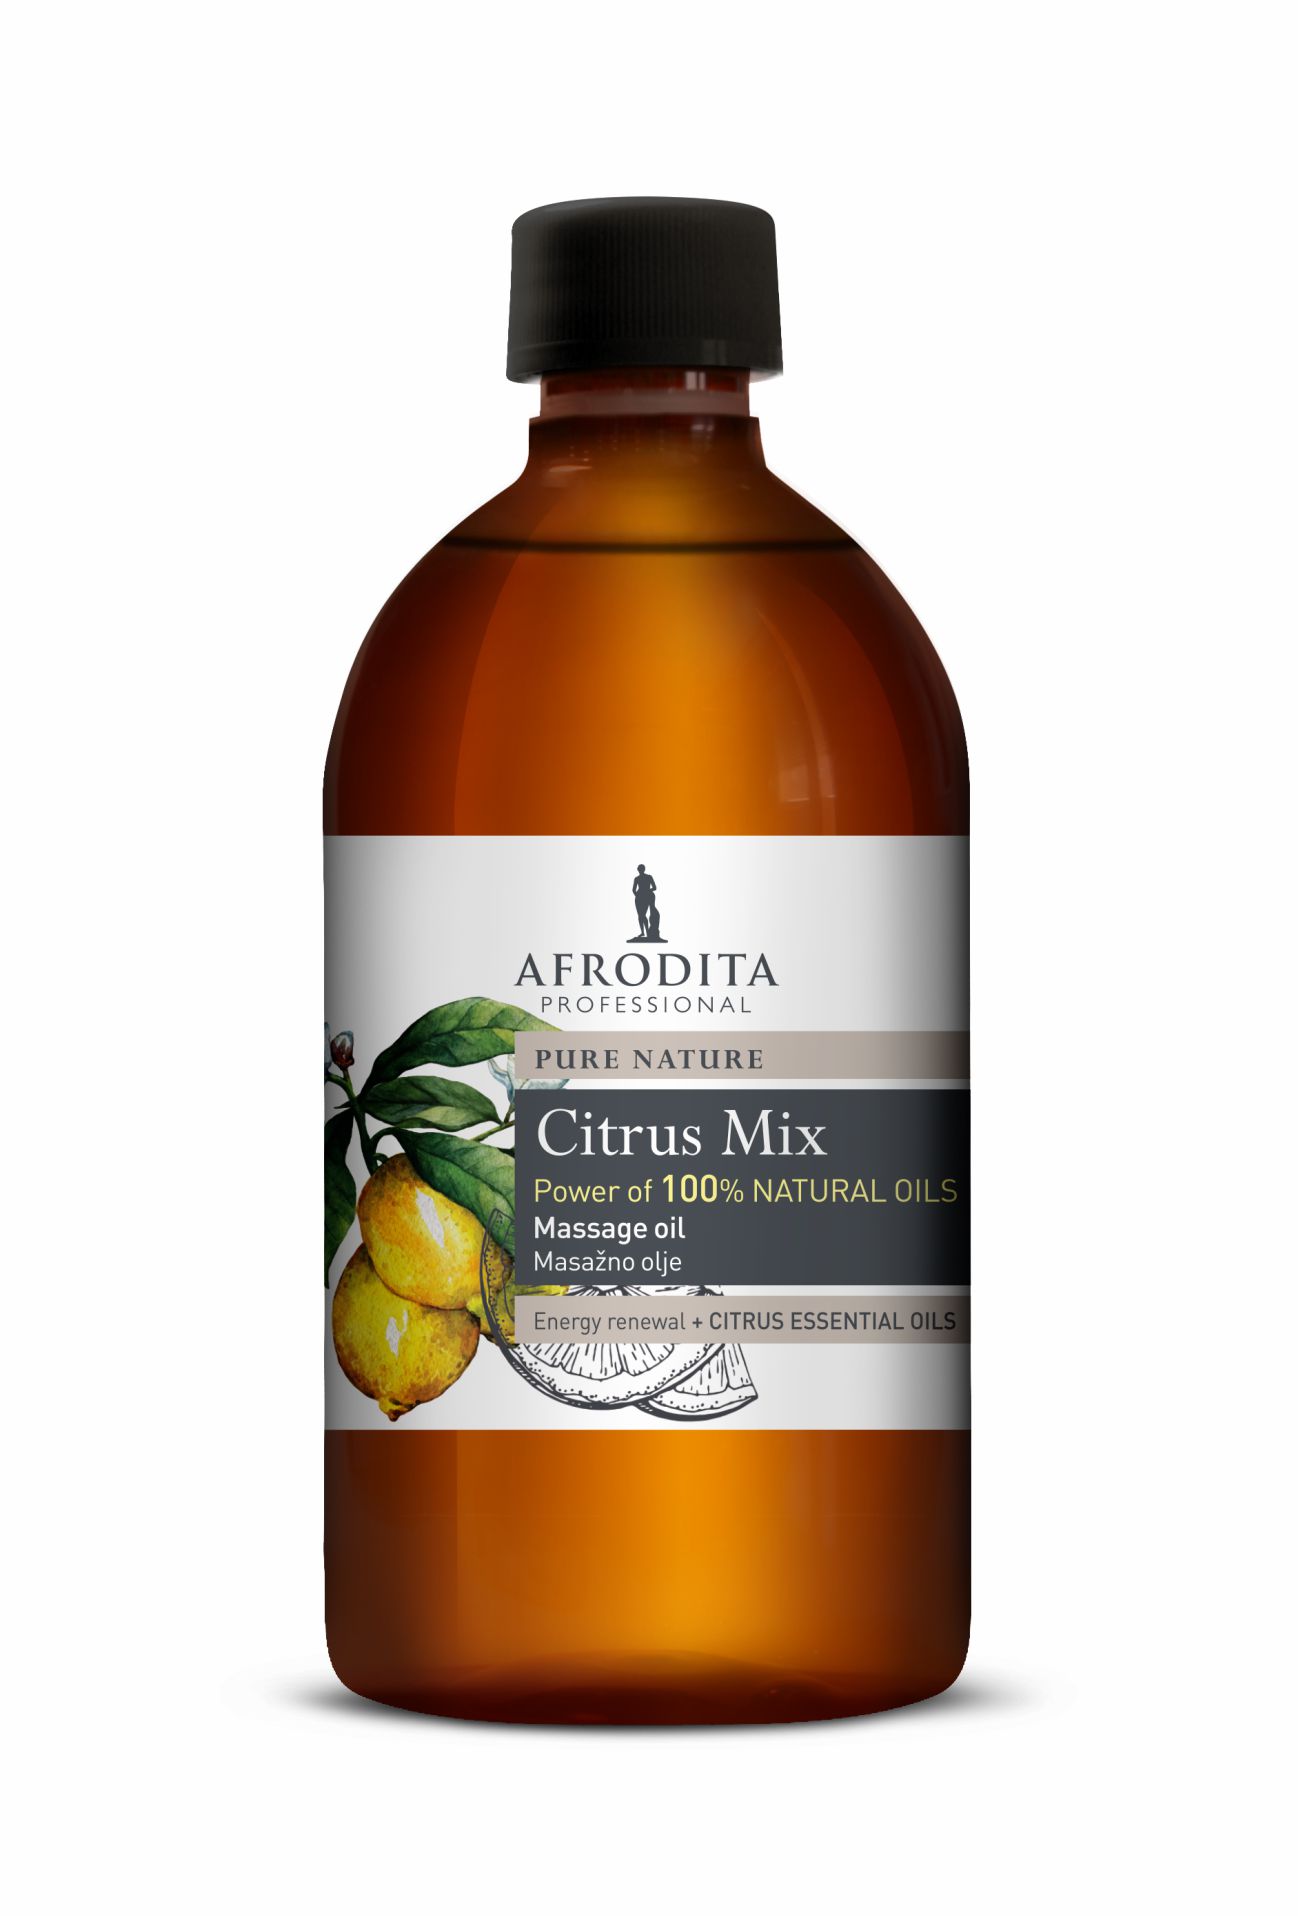 Kozmetika Afrodita - Olej do masażu 500 ml - Citrus mix